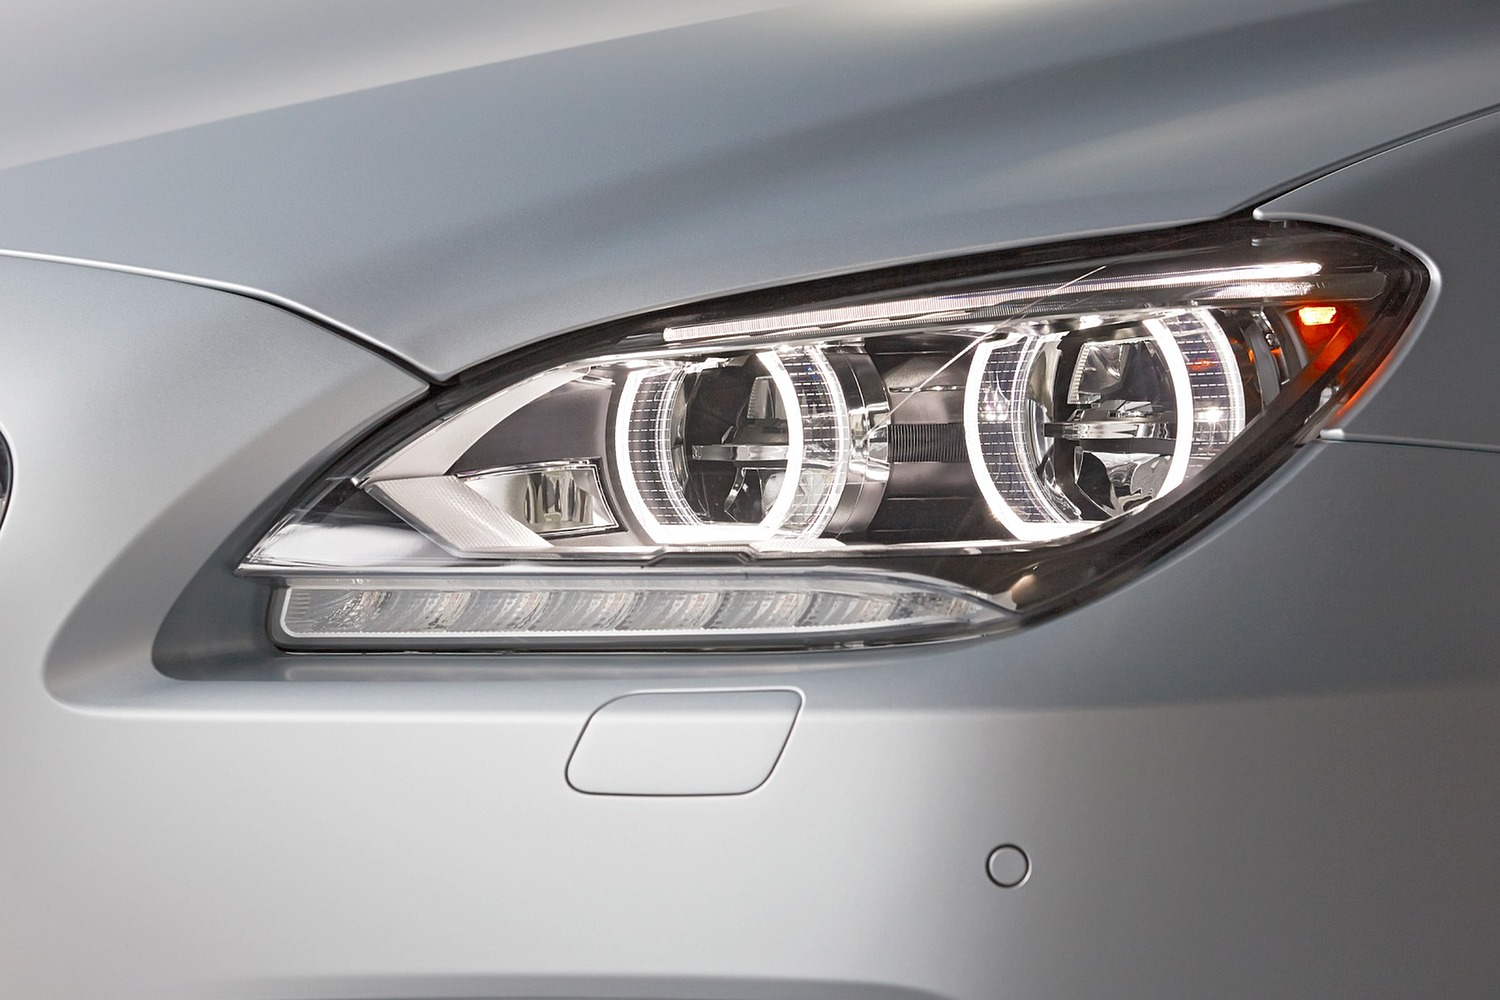 BMW M6 Gran Coupe Sedan Headlamp Detail (2017 model year shown)